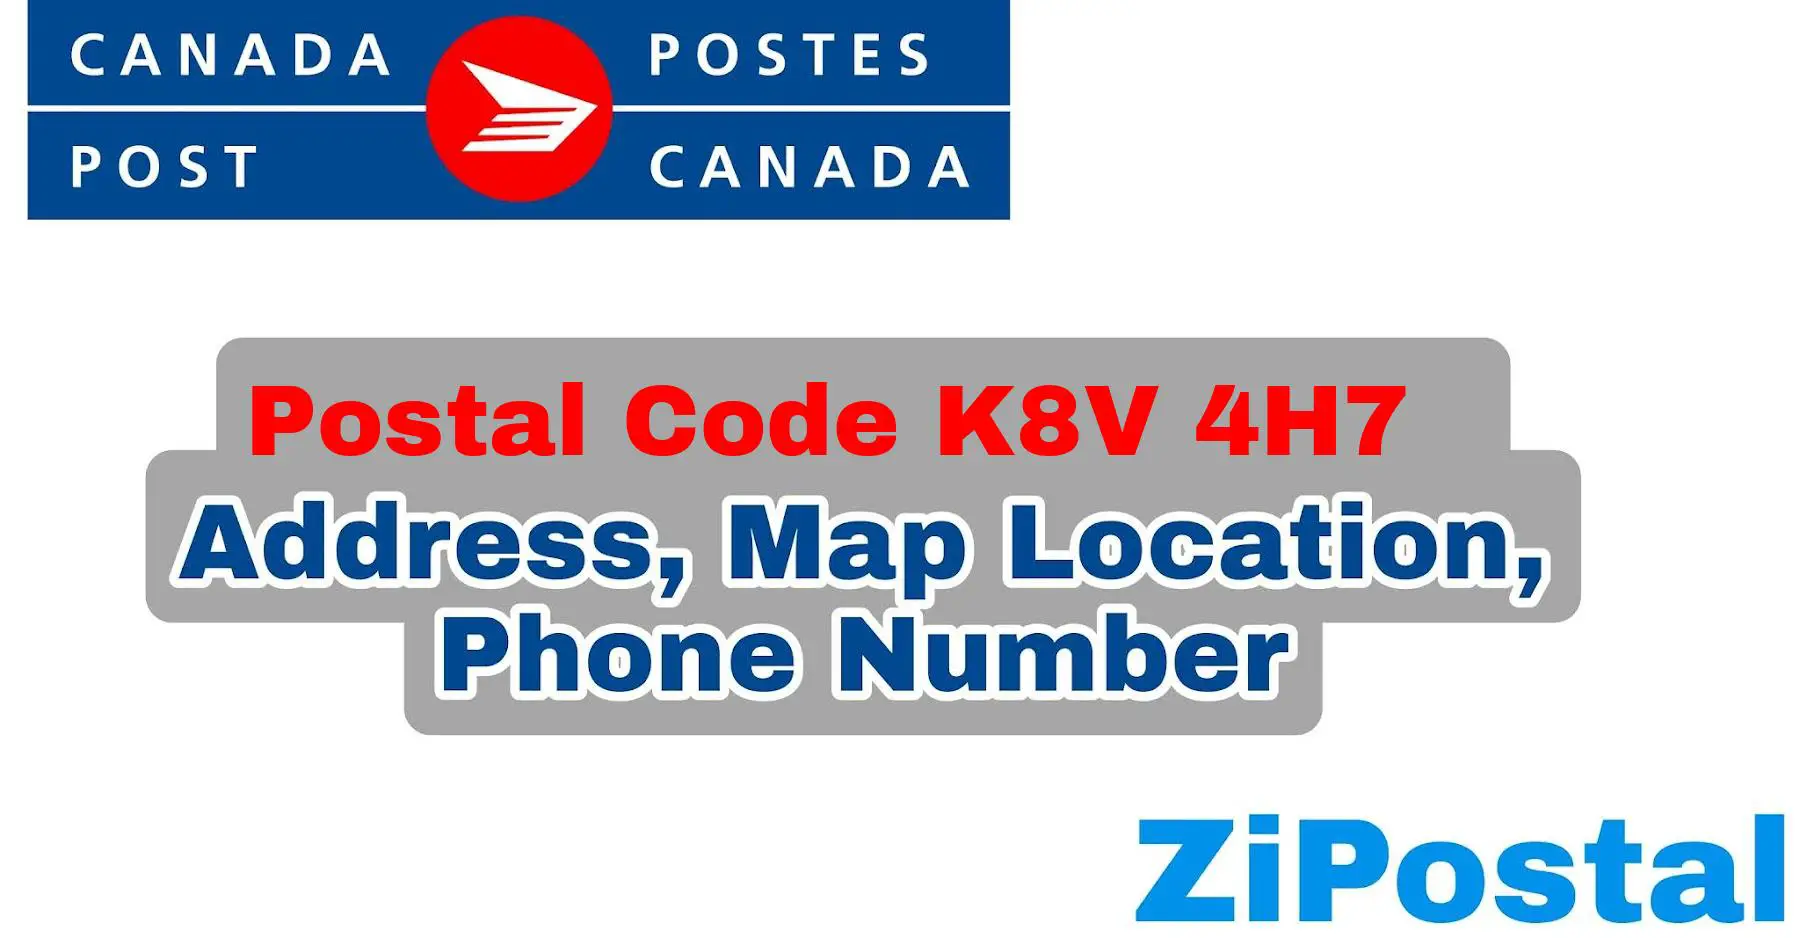 Postal Code K8V 4H7 Address Map Location and Phone Number